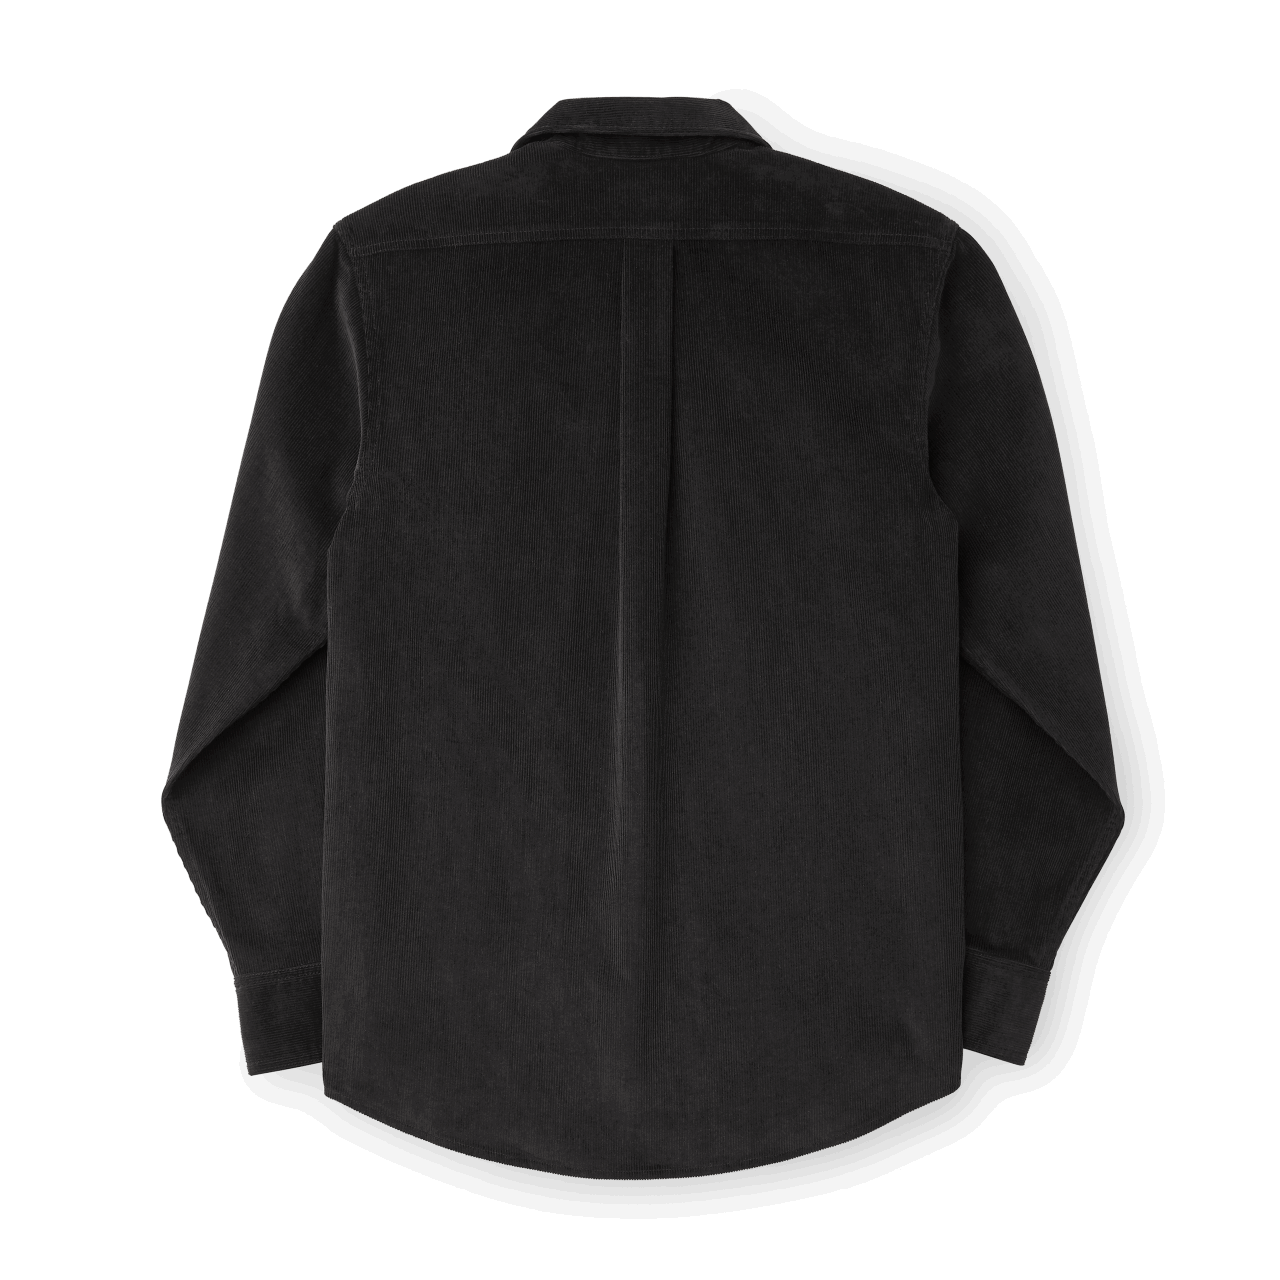 Filson Wale Corduroy Shirt - black